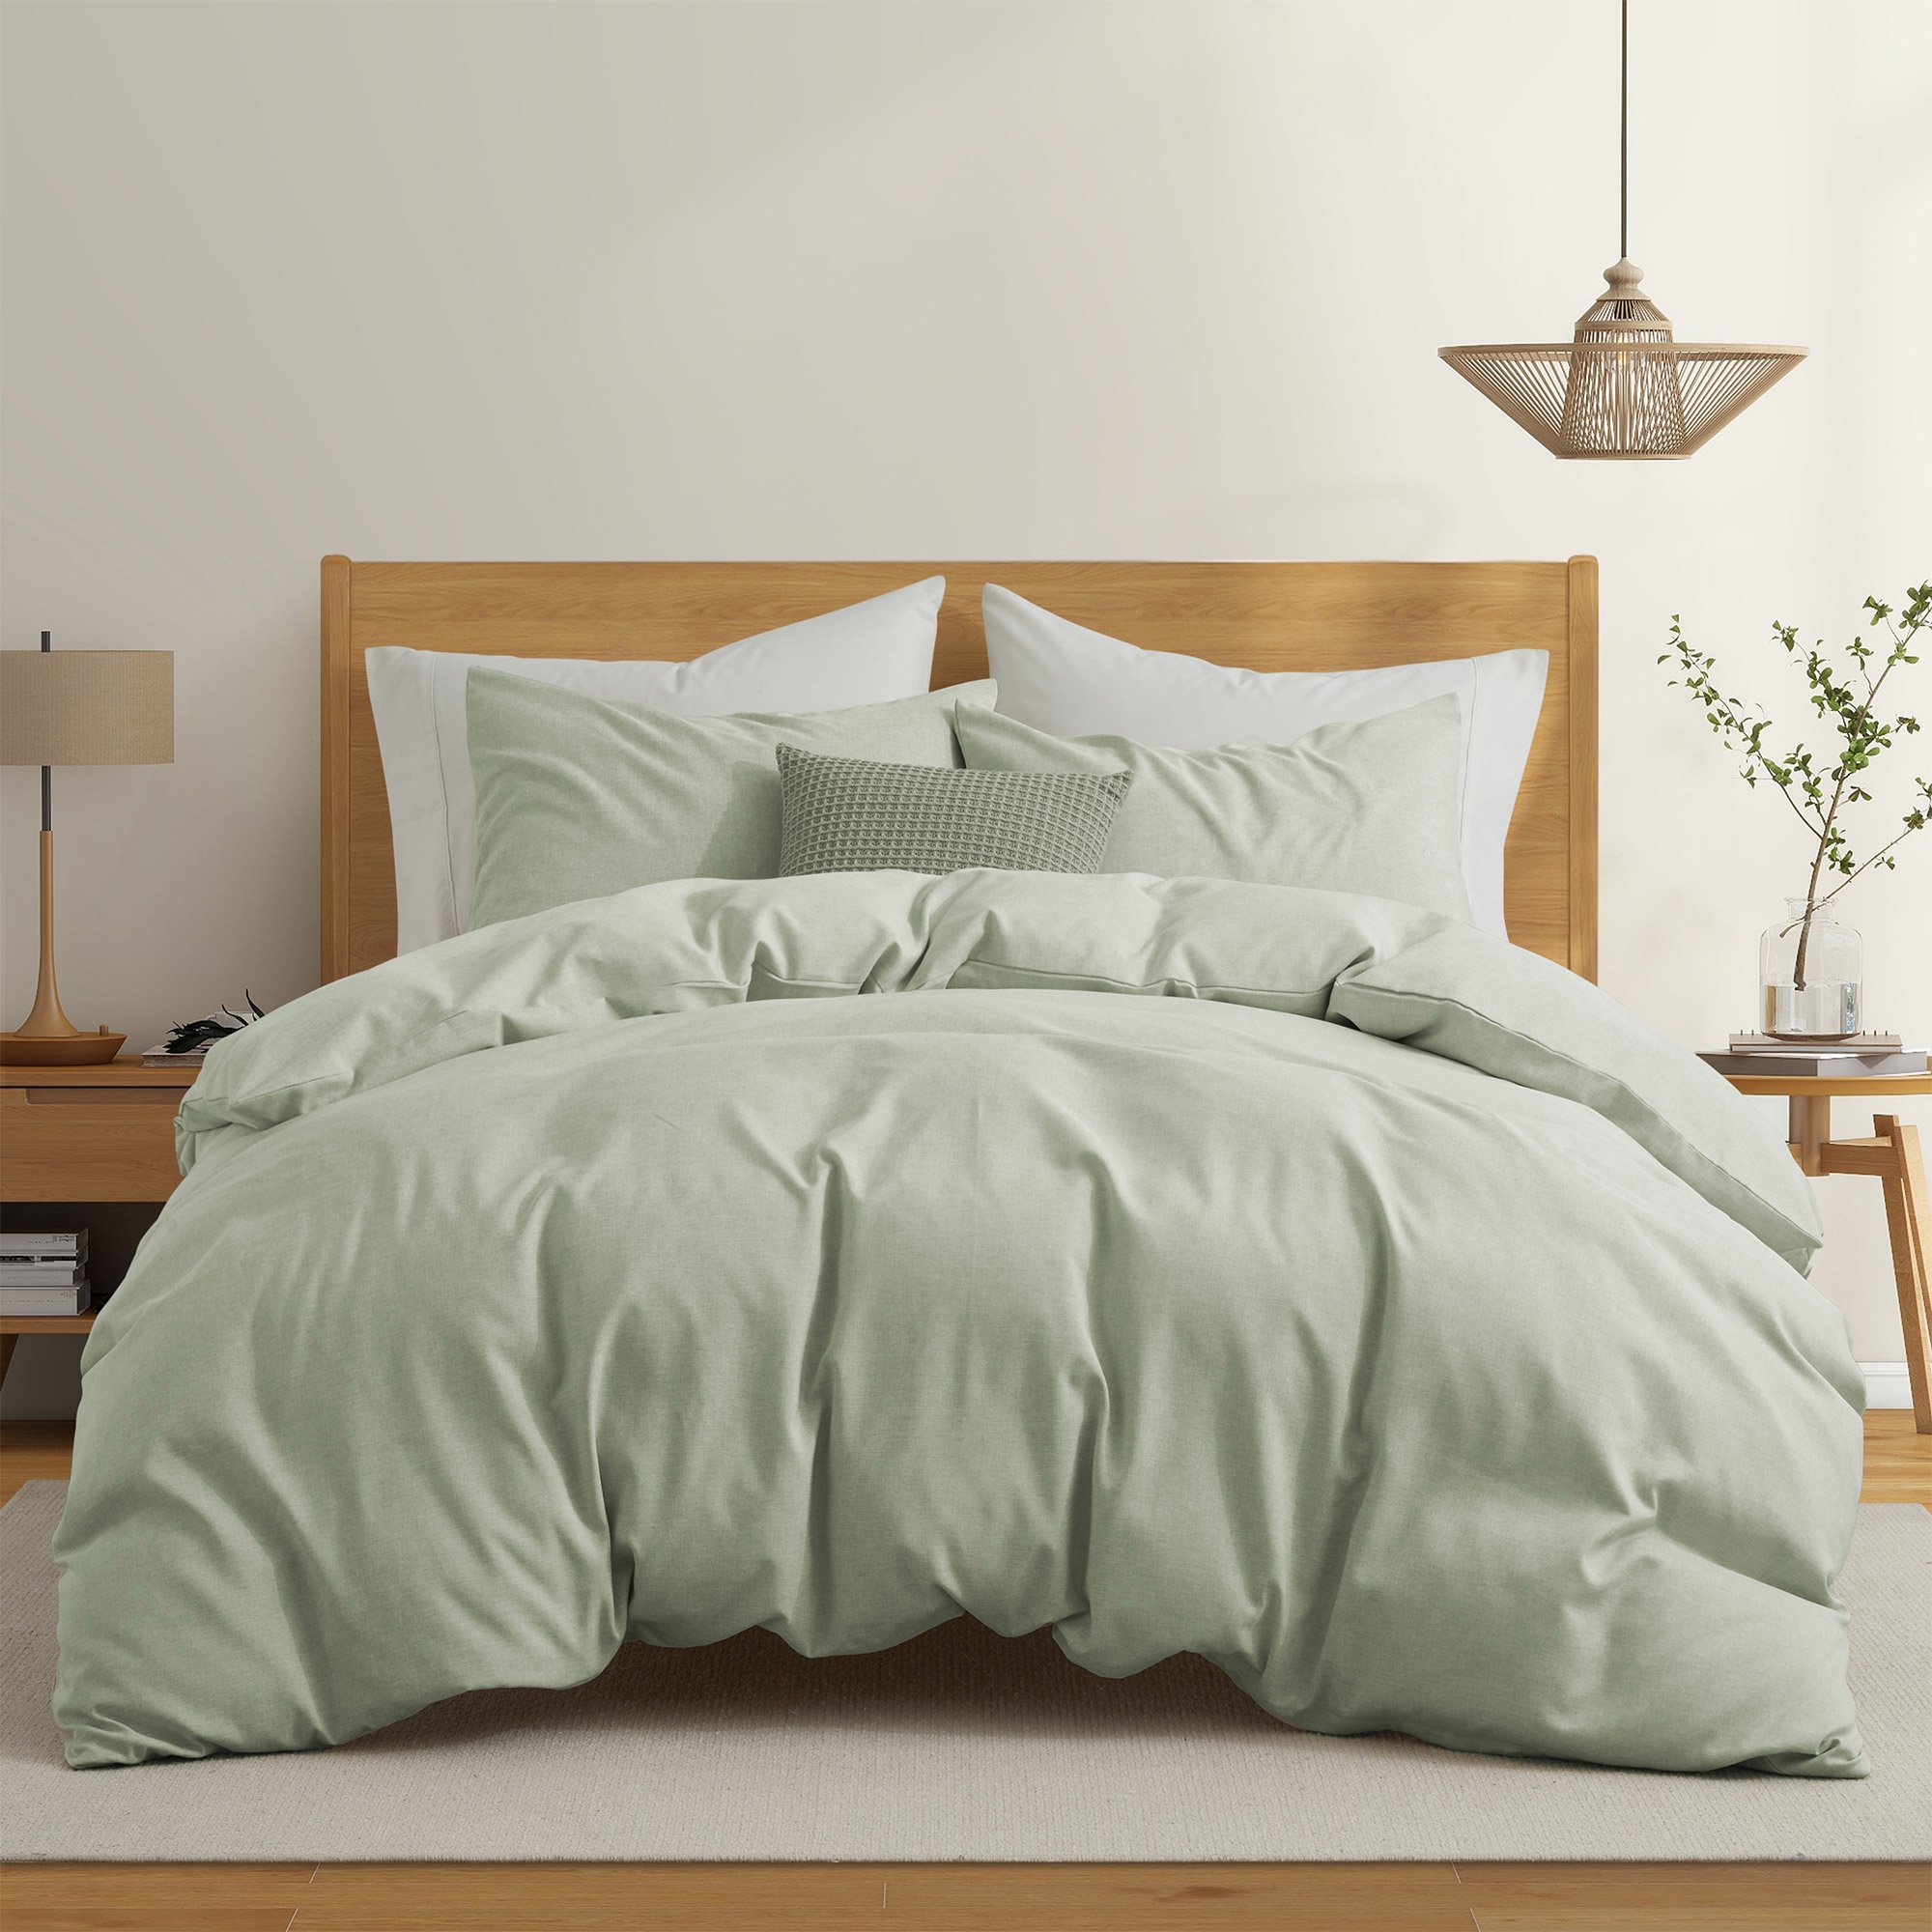 Ultimate Luxury Bedding Bundle: All Season Goose Down Comforter, 2 Pack Gusset Pillows, And Faux Linen Duvet Cover Set - Green Bundles Optio